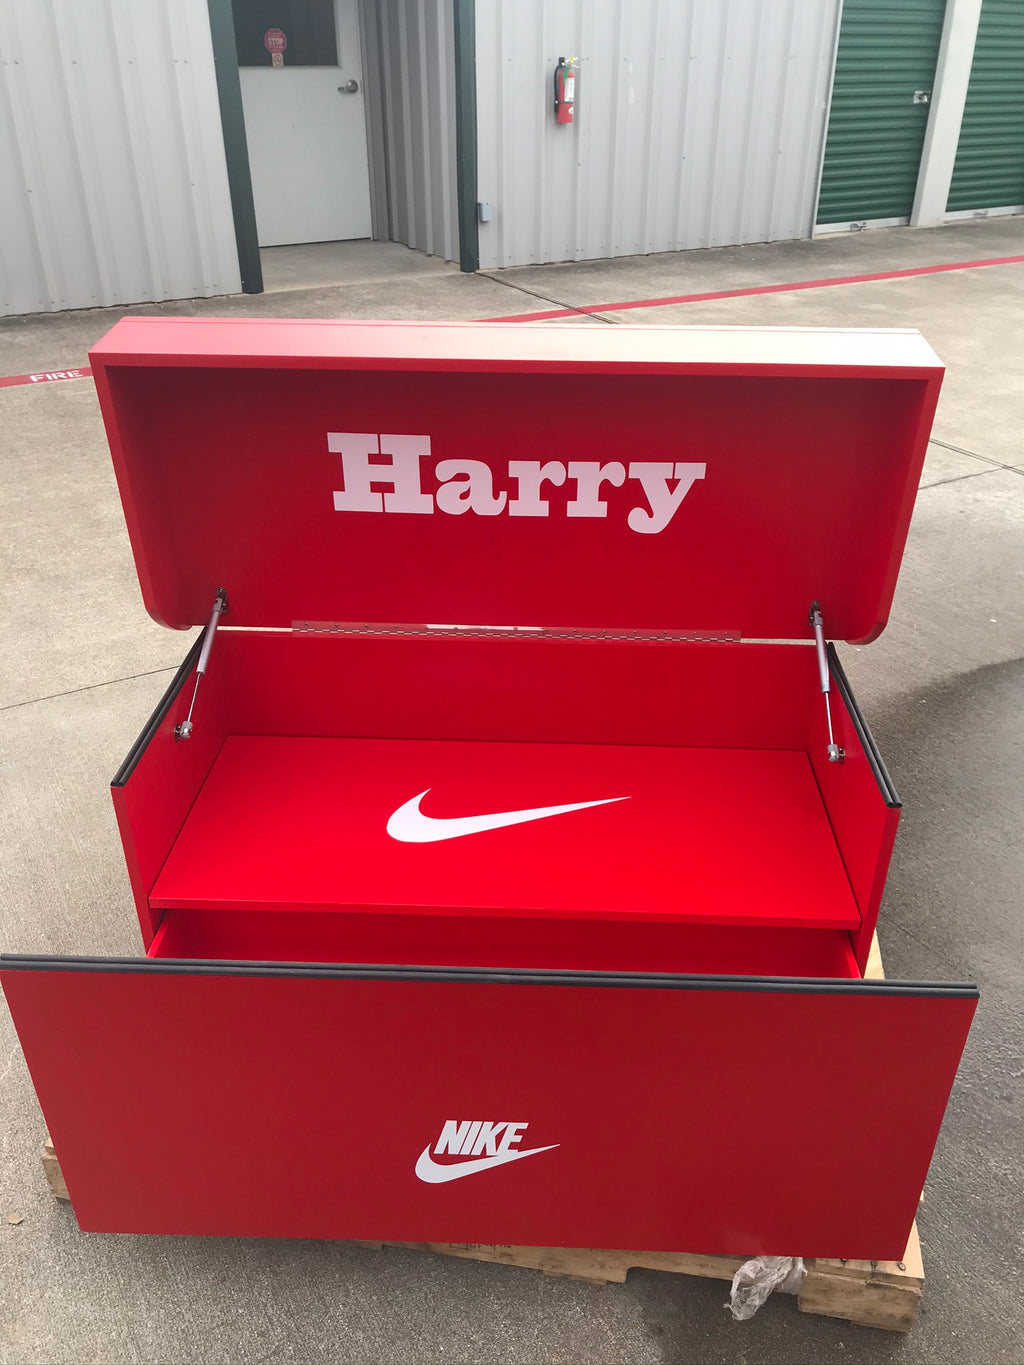 Cumplimiento a hacha educación Giant Nike Inspired Shoe Box Storage | Sneakerhead Shoebox